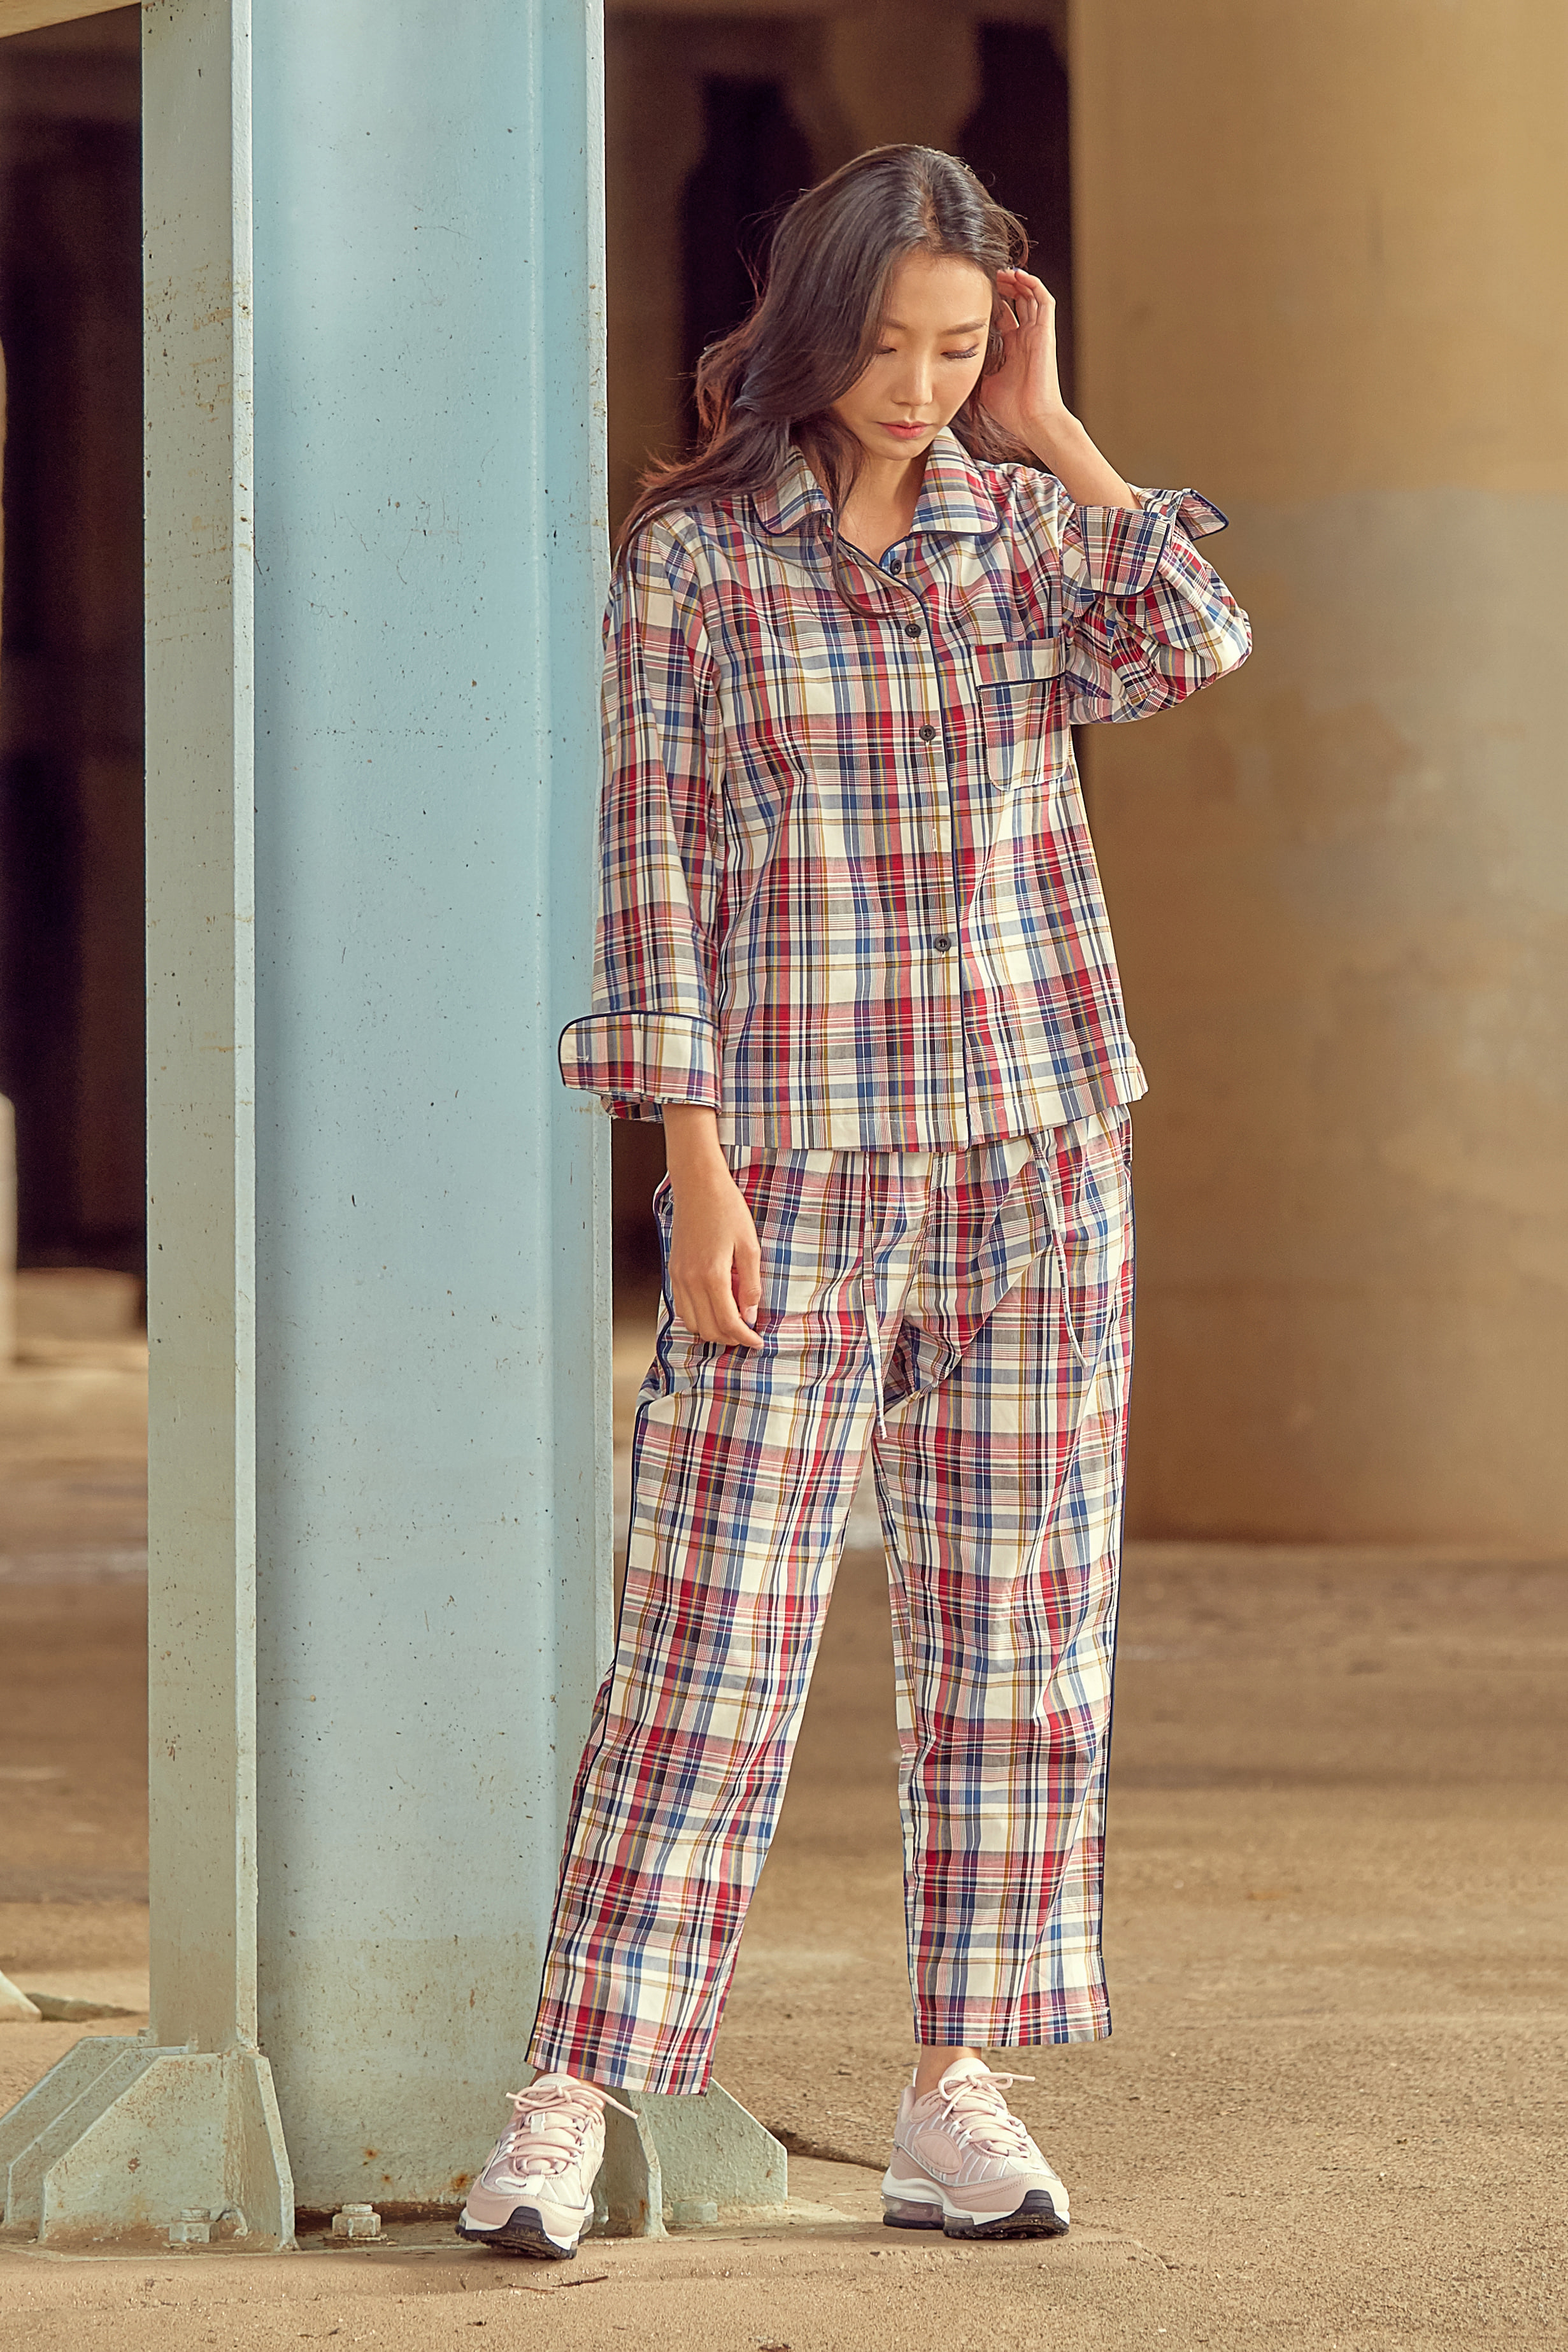 korea fashion brands, made in korea pajamas, pajamas korean wholesale, korean sleepwear supplier, matching pajamas, Modal pajamas, kpop fashion brands, kids pajamas and sleepwear, family pajamas, Designer Sleepwear for Women